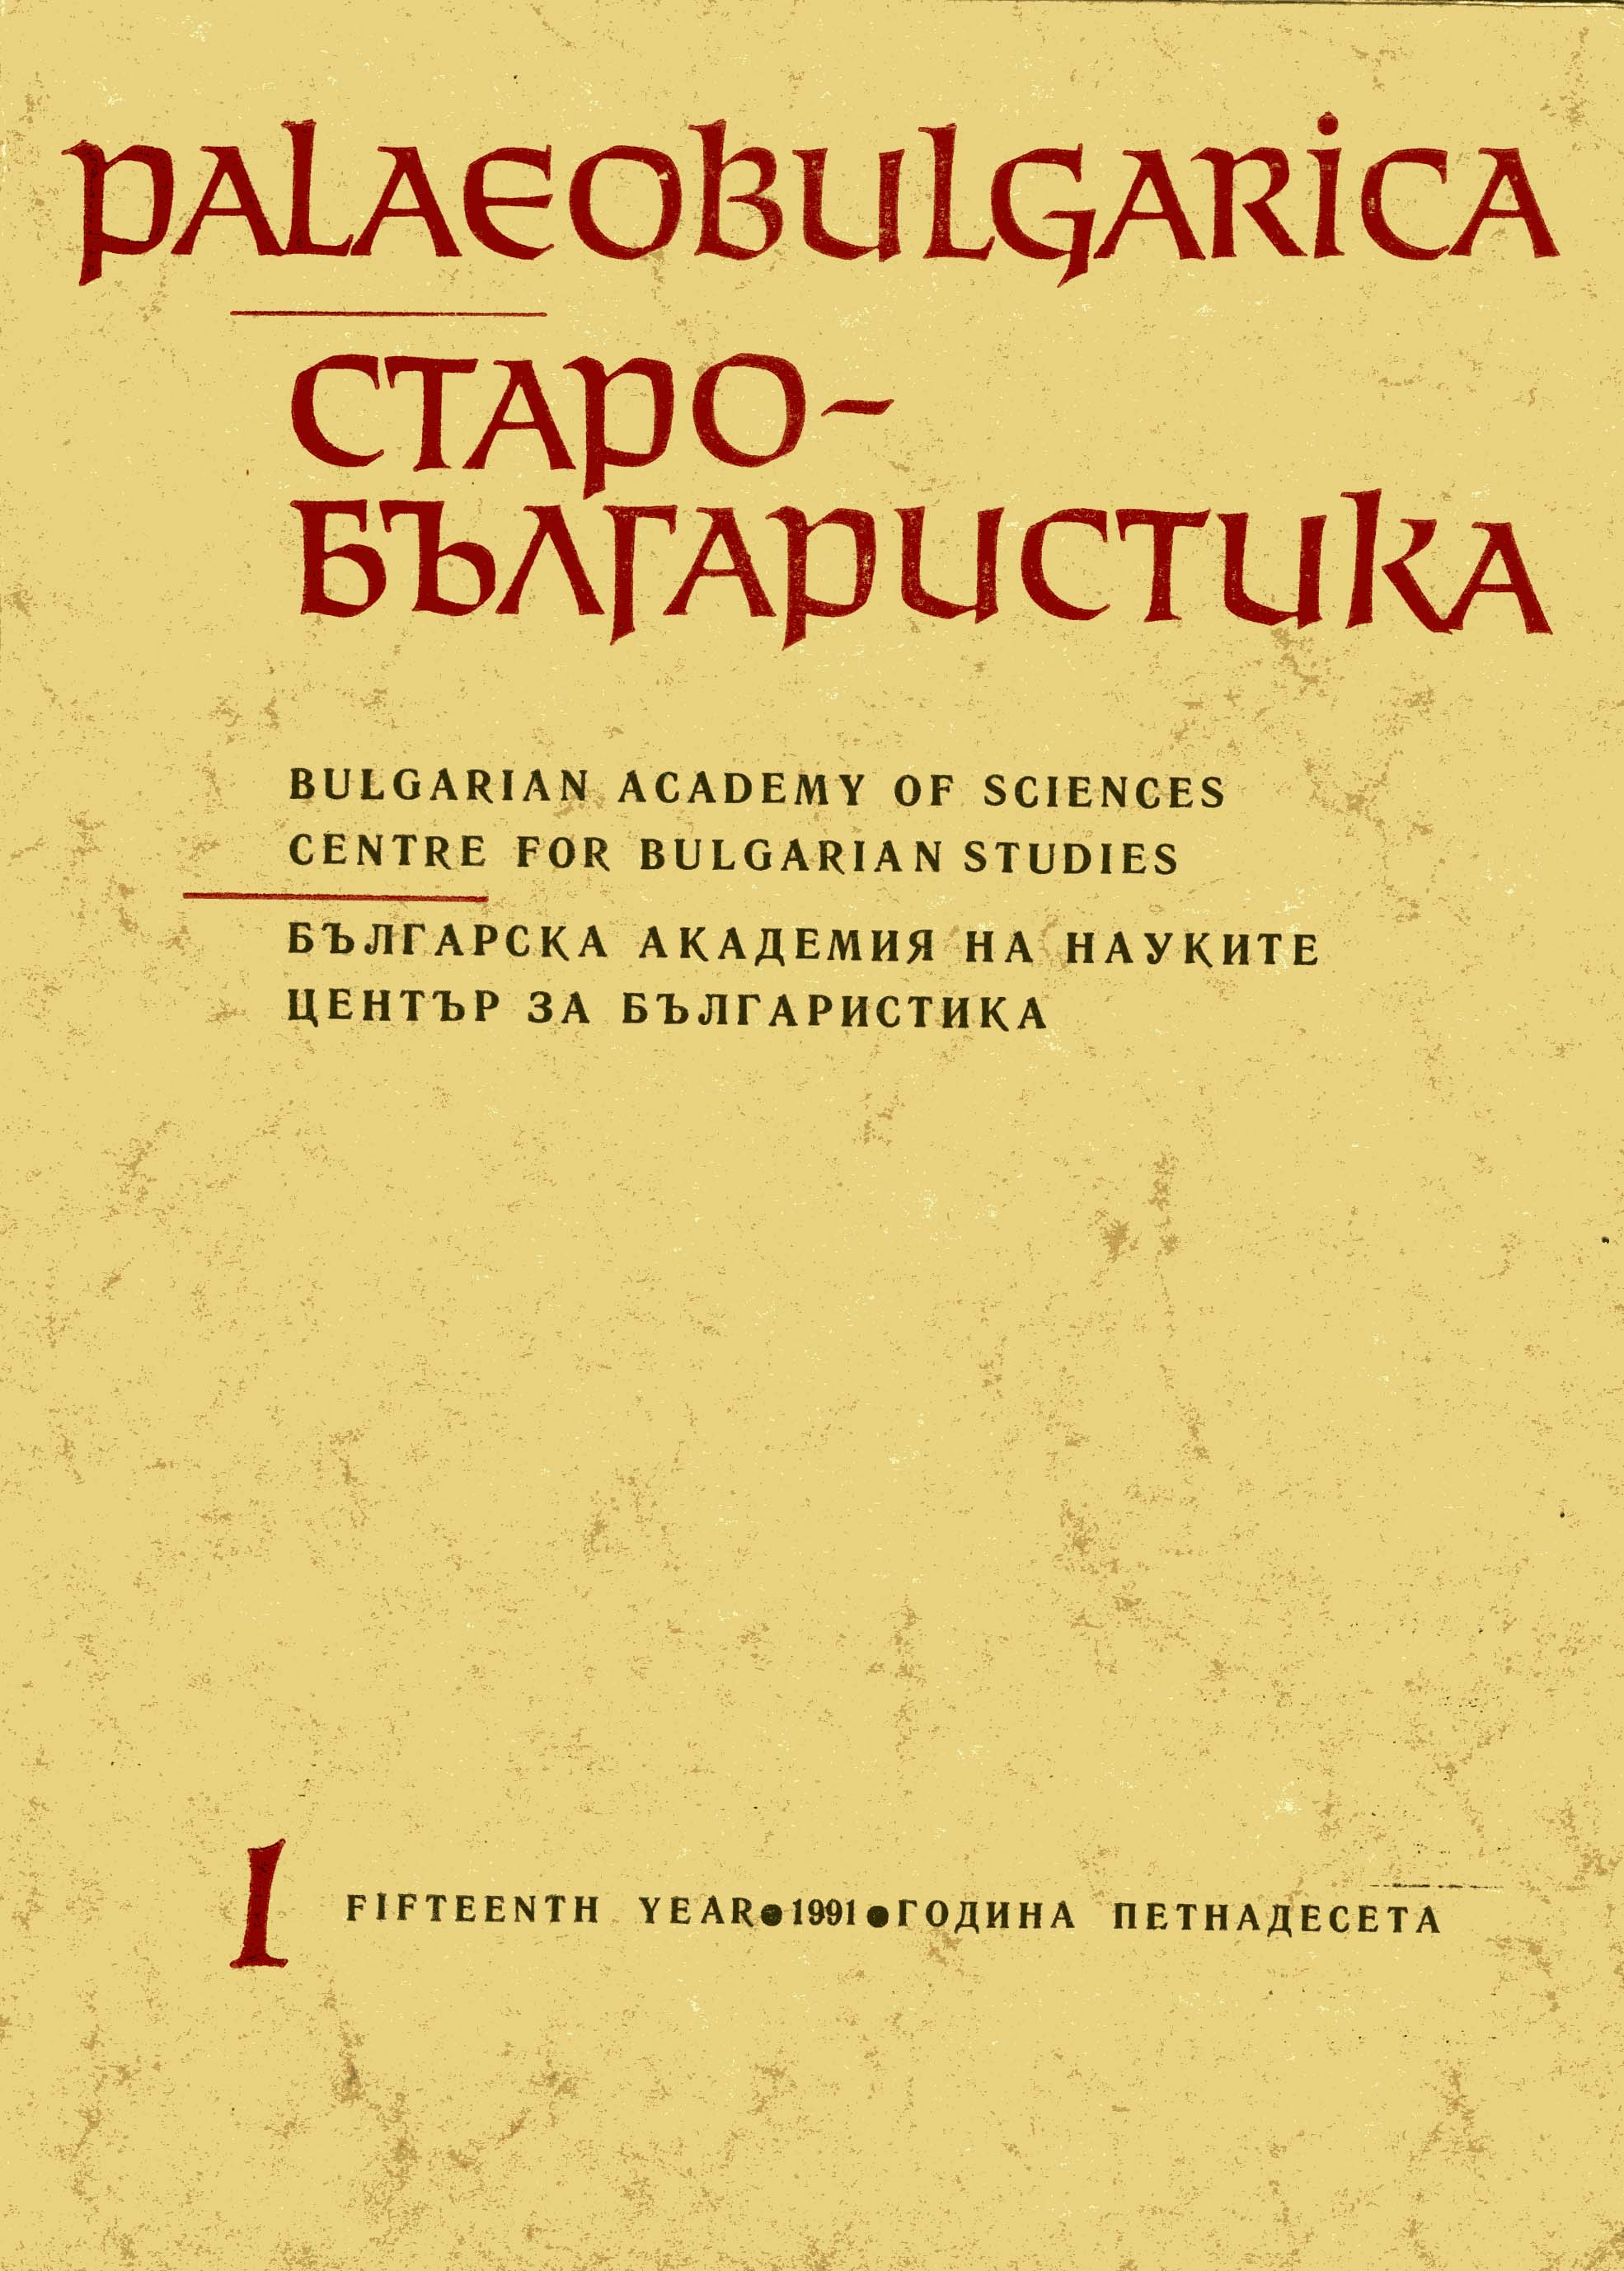 Bandurieva Legenda and Its Historical Value Cover Image